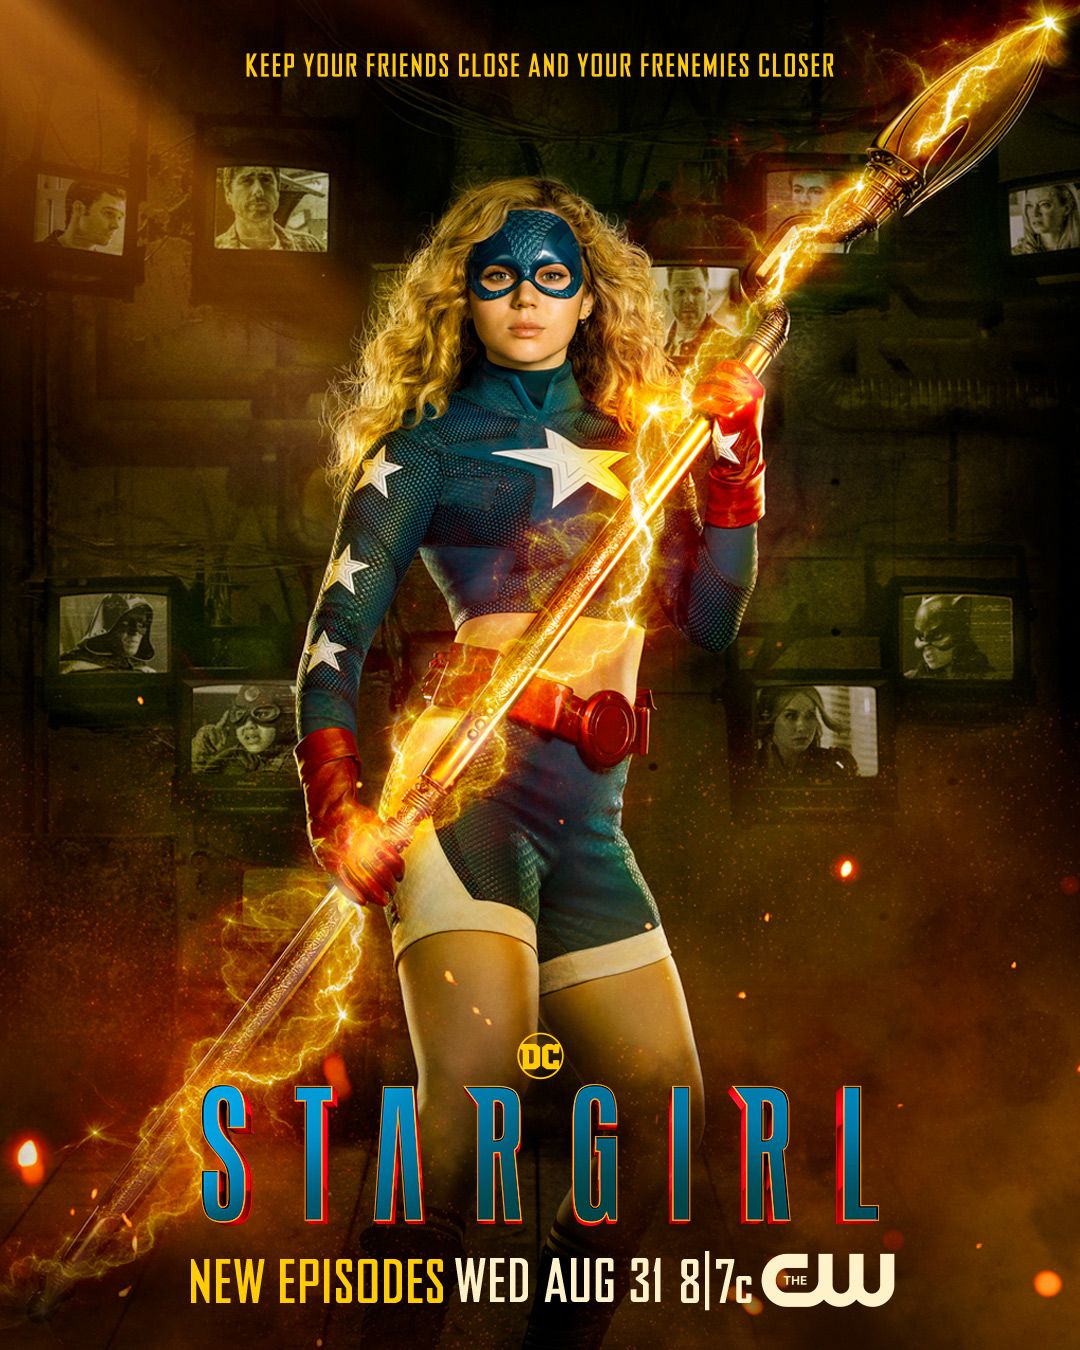 Stargirl Season 3 Poster Teases Frenemies Saga